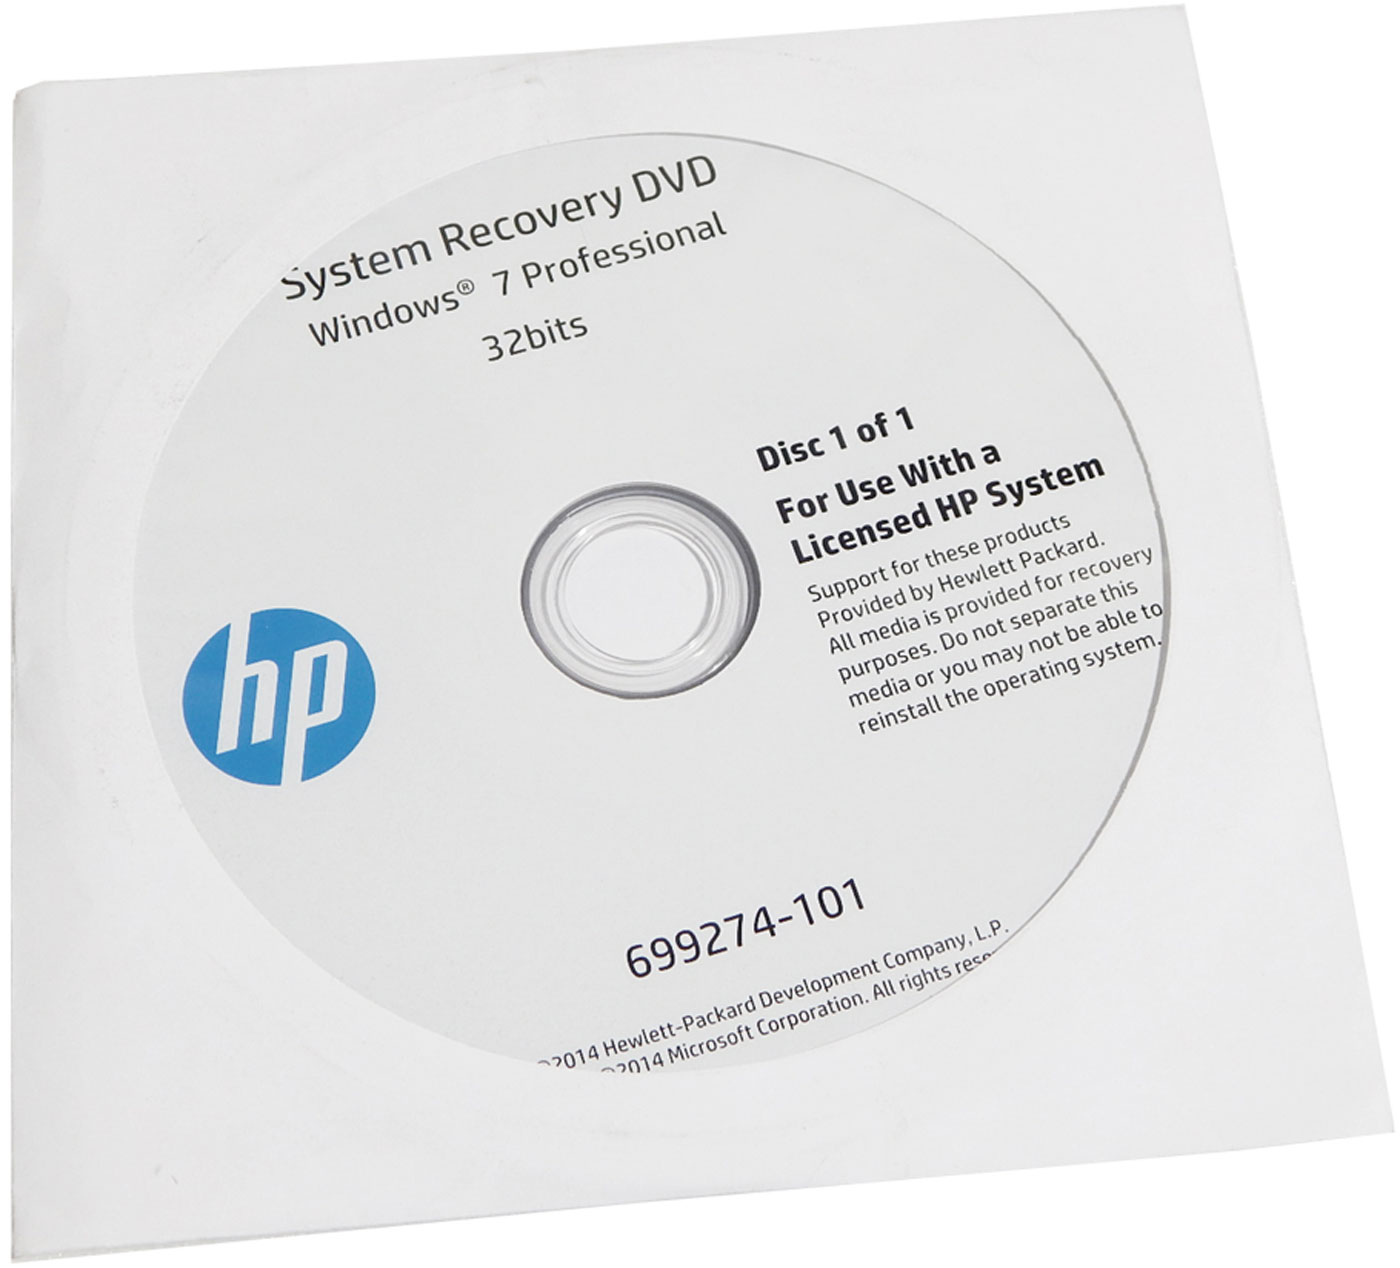 kleinhandel voorzien drie HP System Recovery Windows 7 Pro 32bits DVD 699274-001 706695189210 | eBay